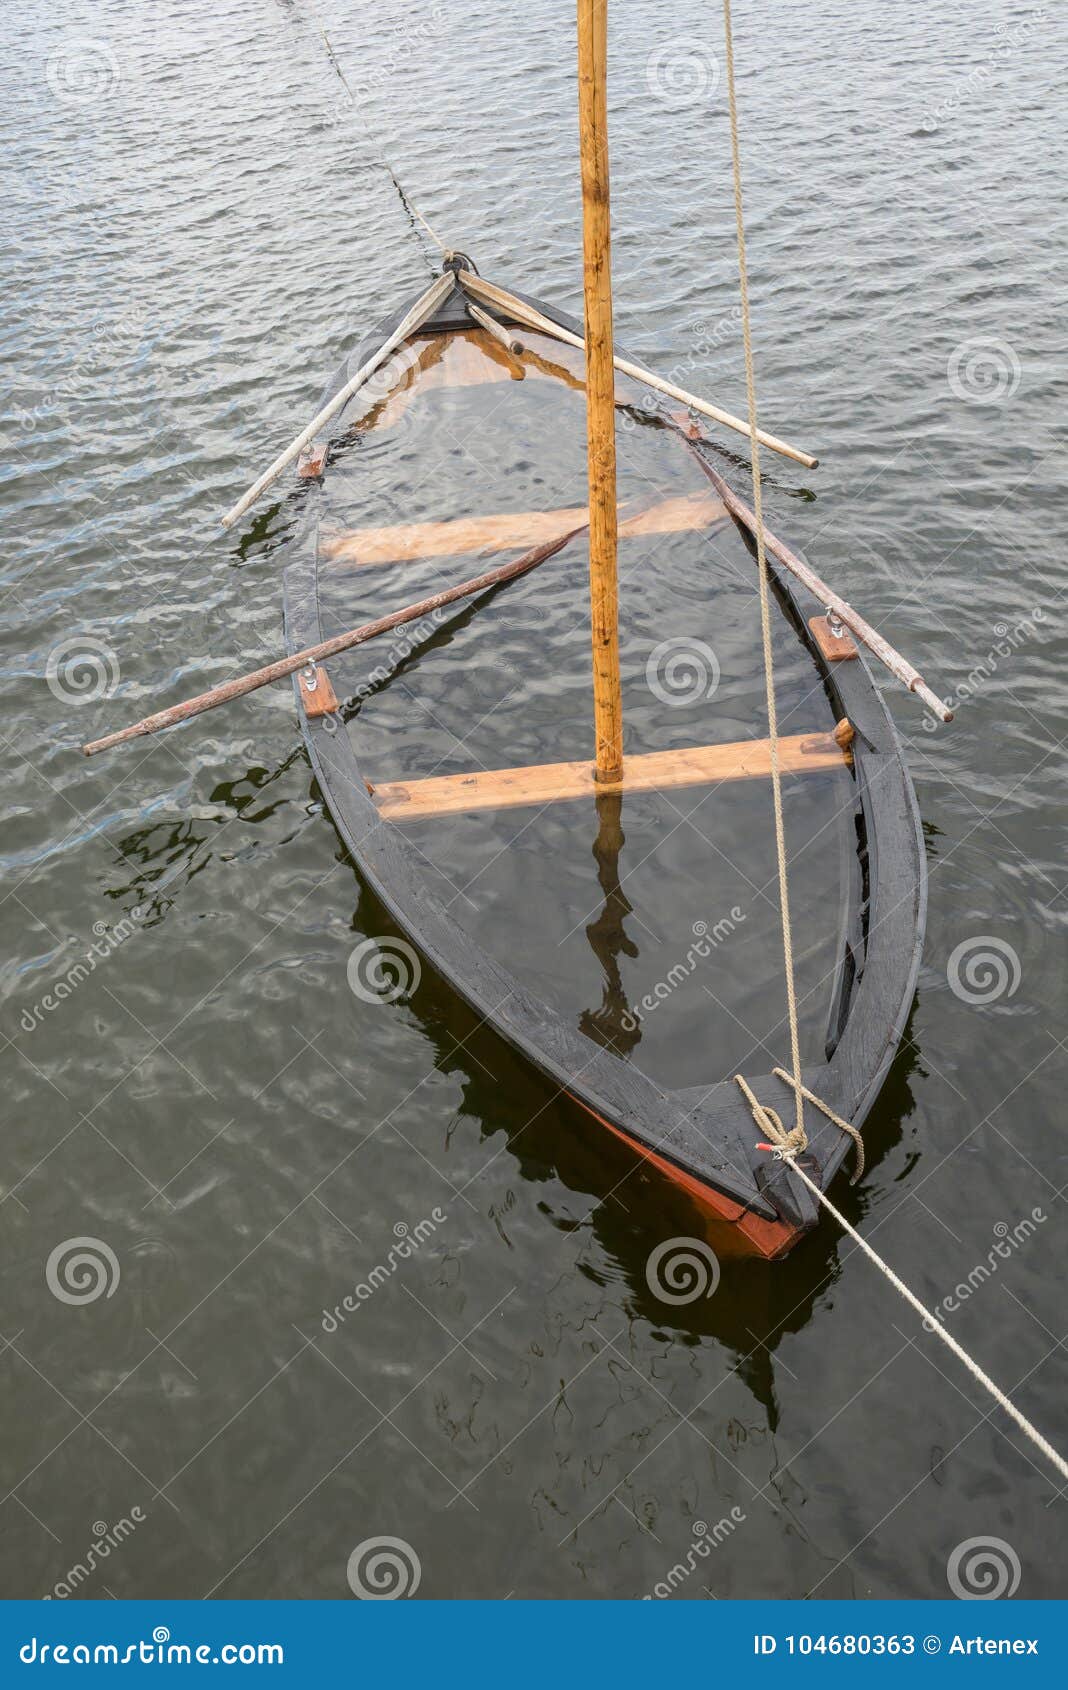 classic ocean sloop wooden sailboat model decor